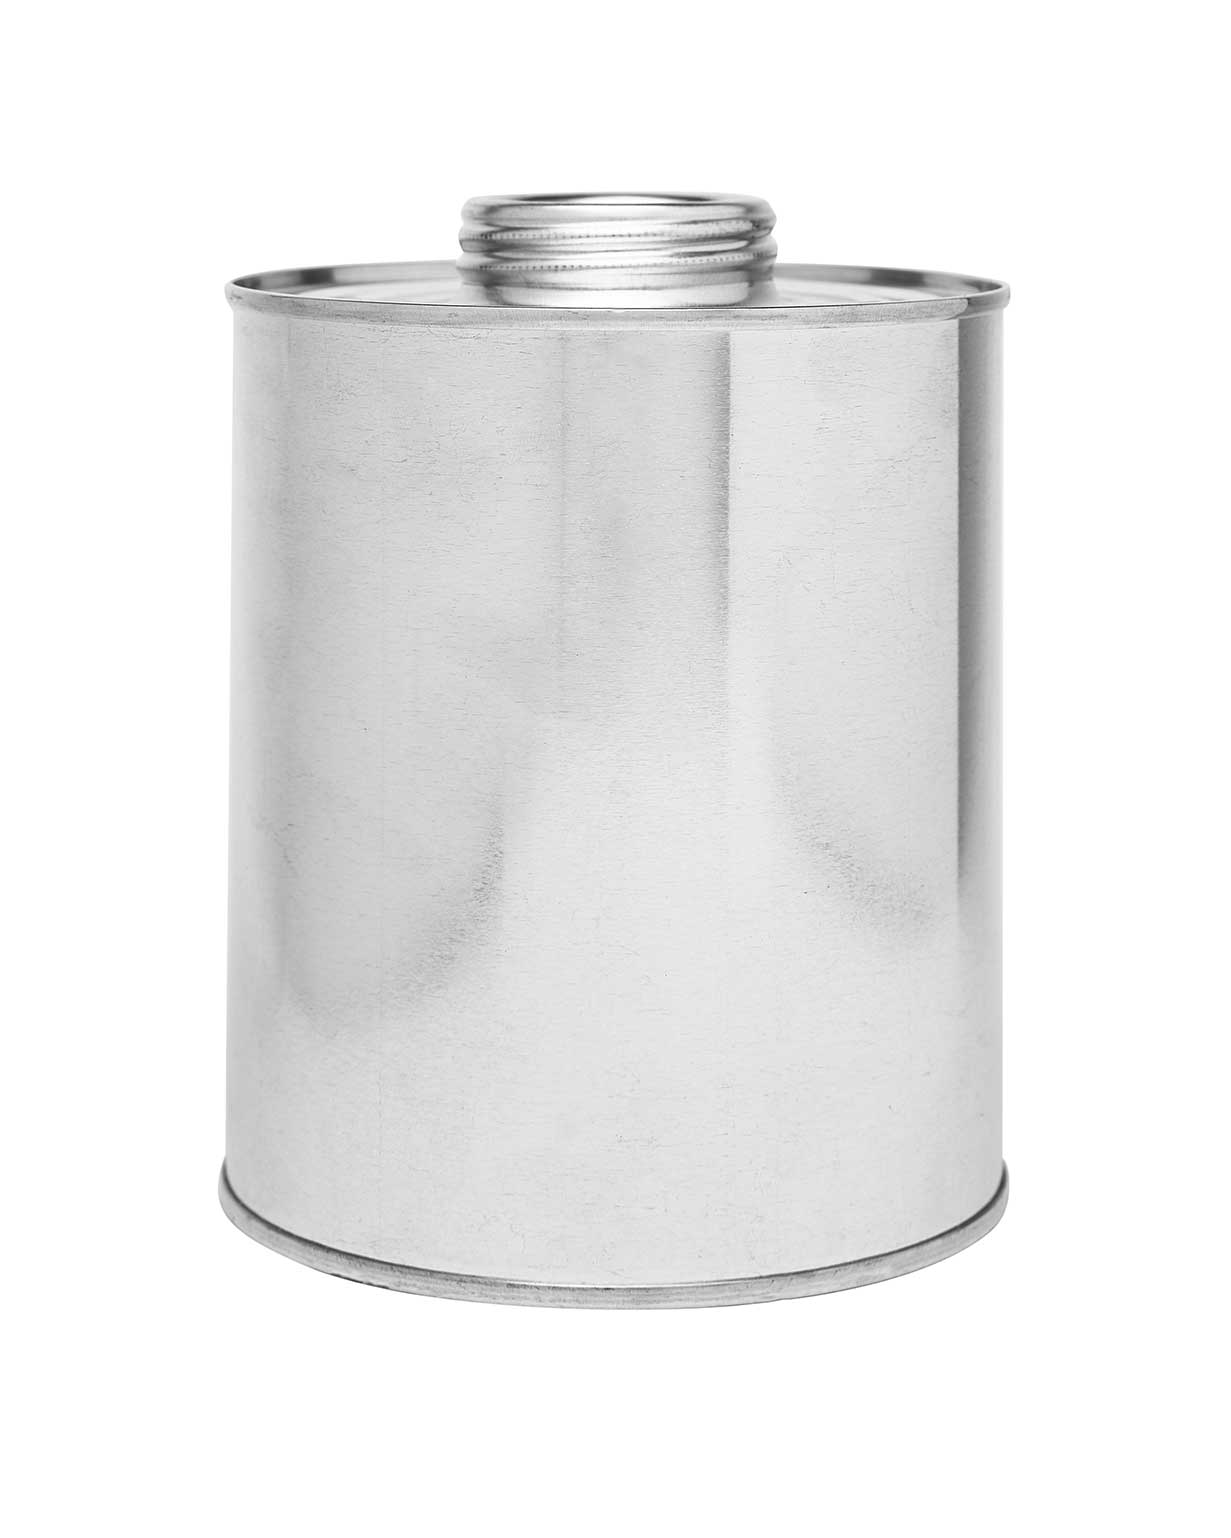 4 oz tin silver 1-3/4" international 404x414 monotop can